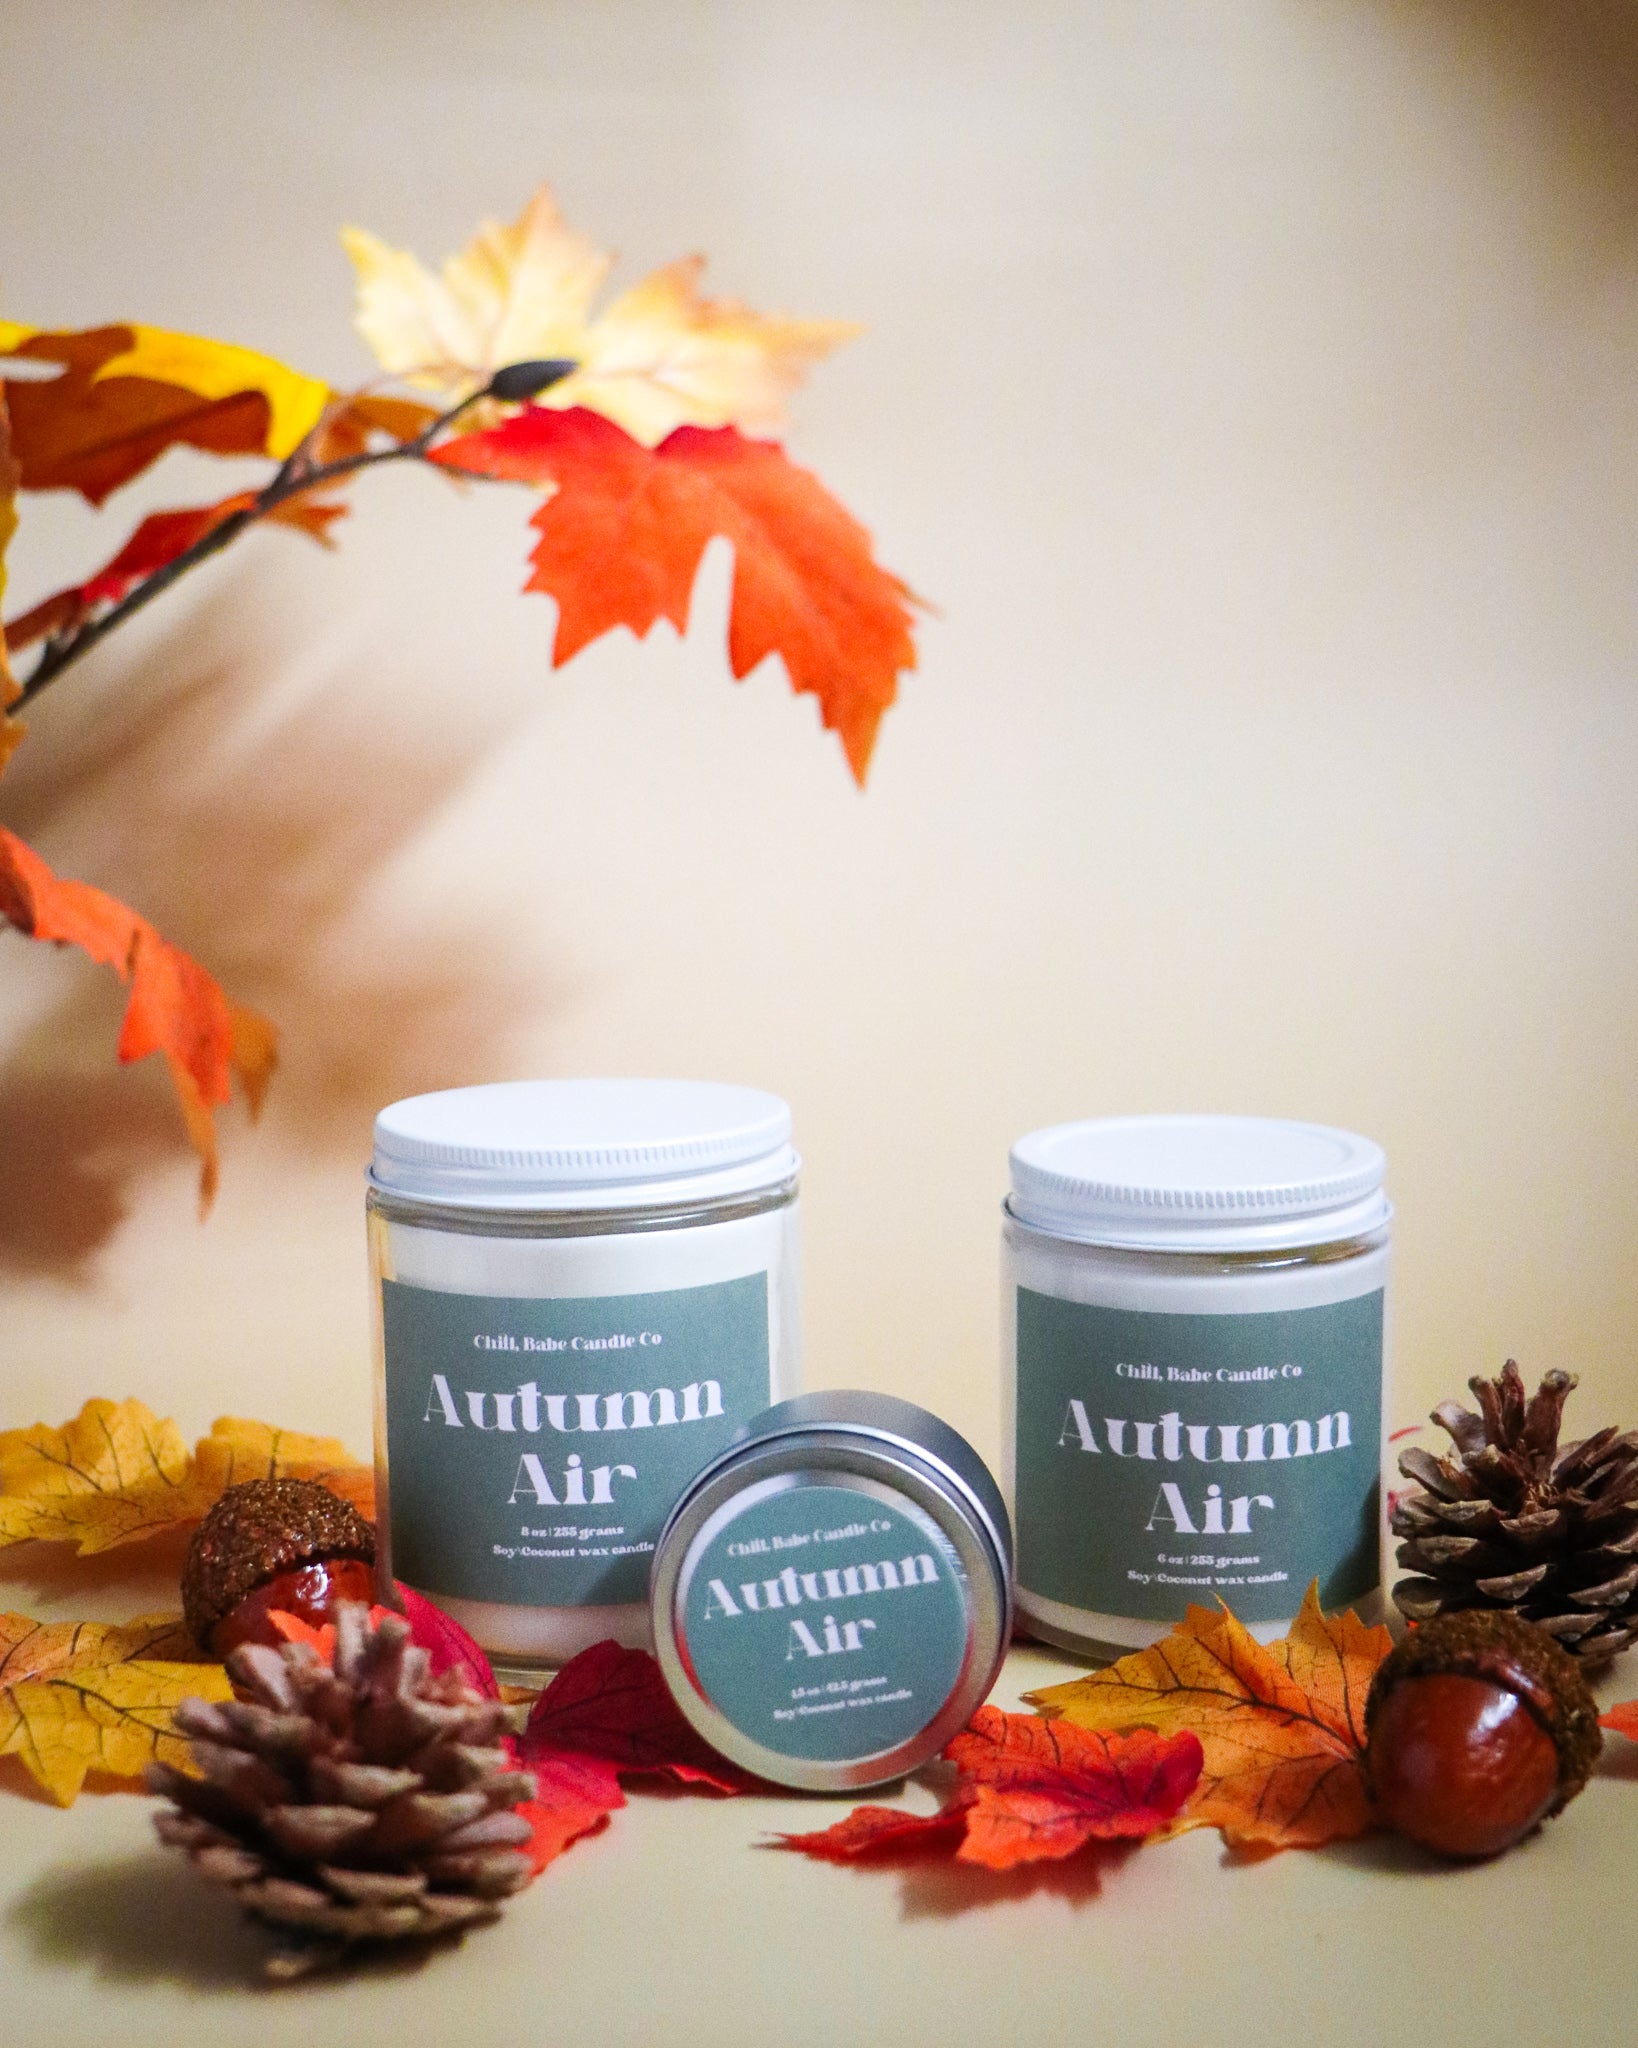 Autumn Air Candle | Oak + Citrus + Golden Amber